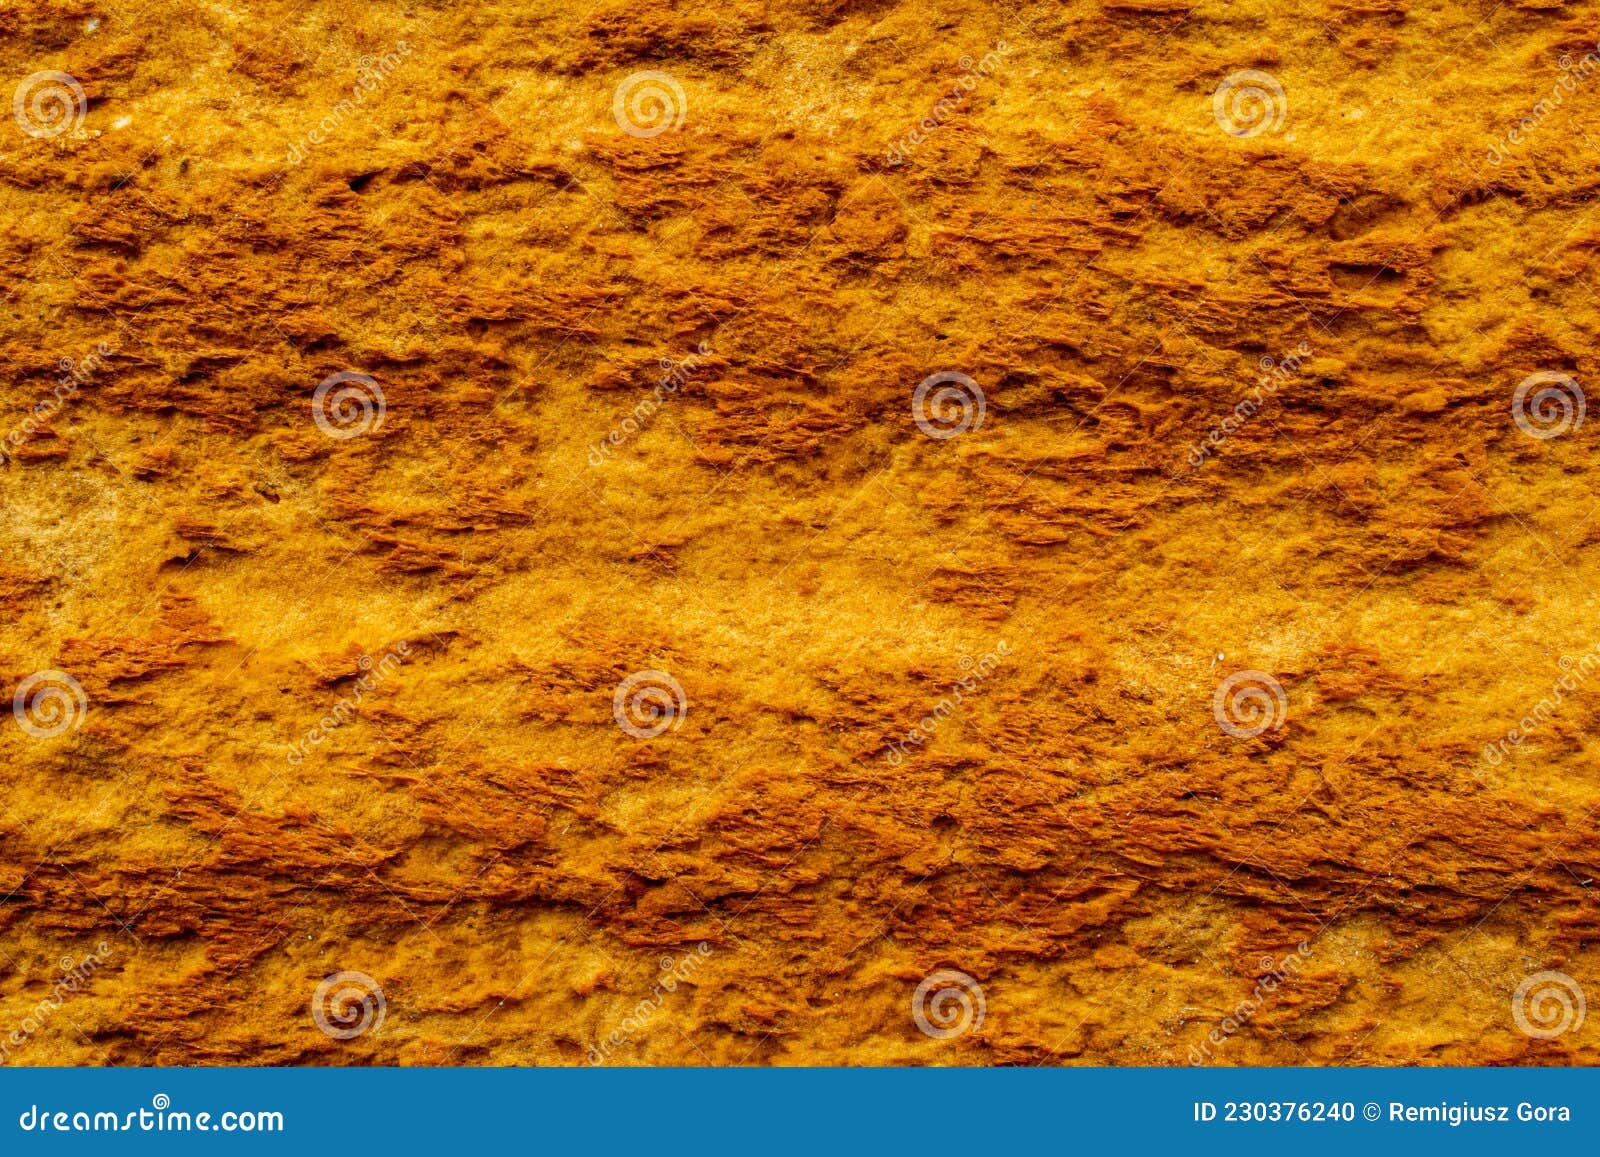 orange rough texture for tapete